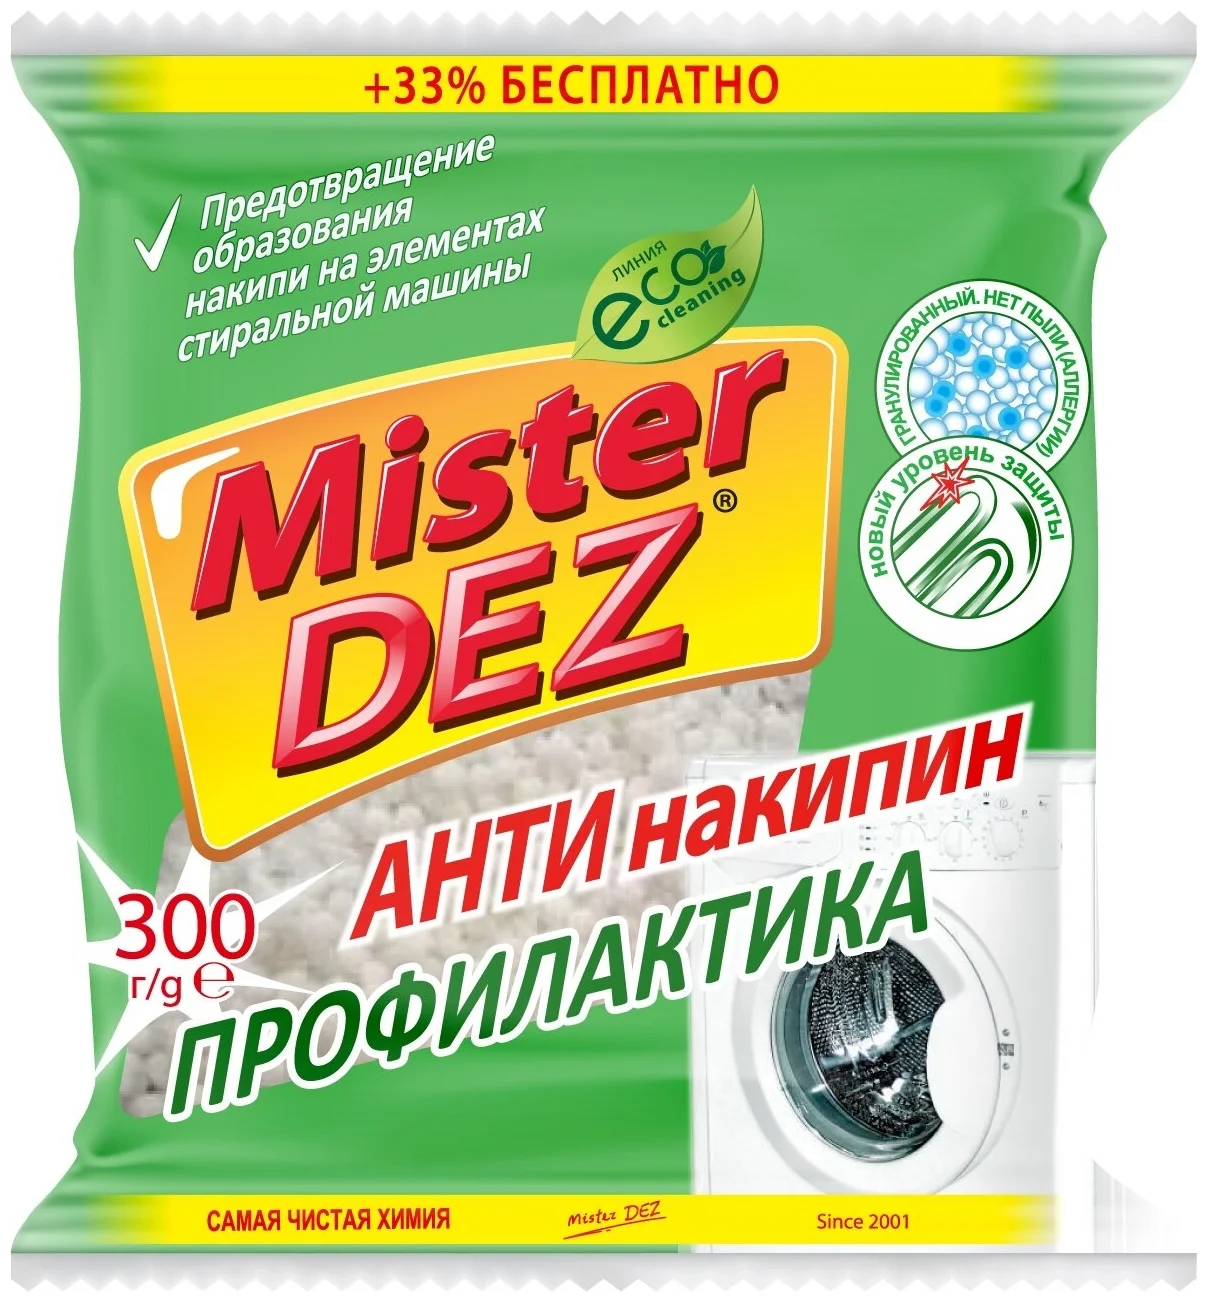 фото Средство для удаления накипи mister dez eco-cleaning профилактика, 300 г